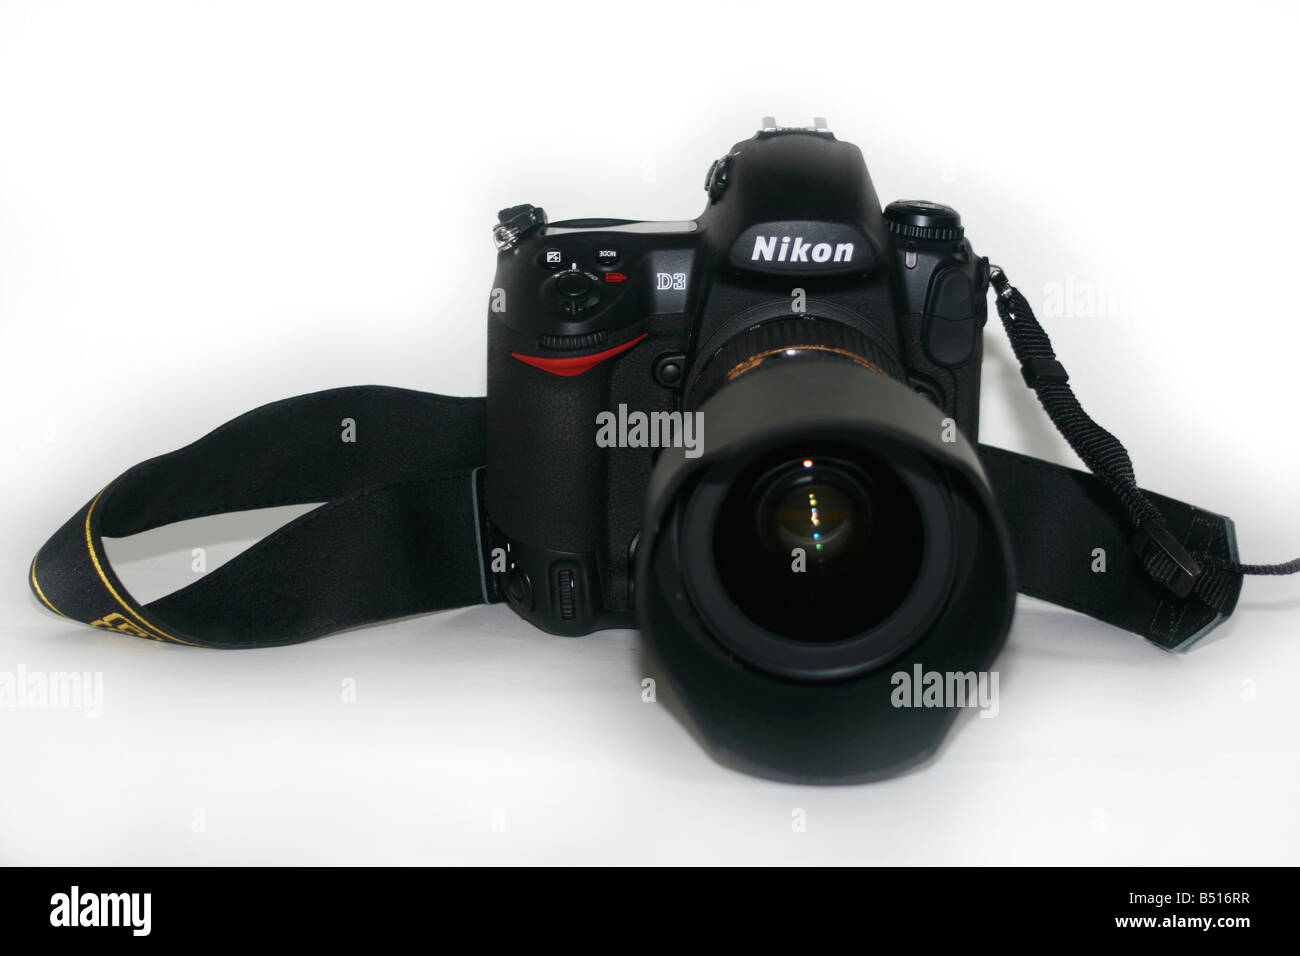 Nikon D3 Nikons new flagship professional camera and 24mm 70mm f2 8 lens Stock Photo